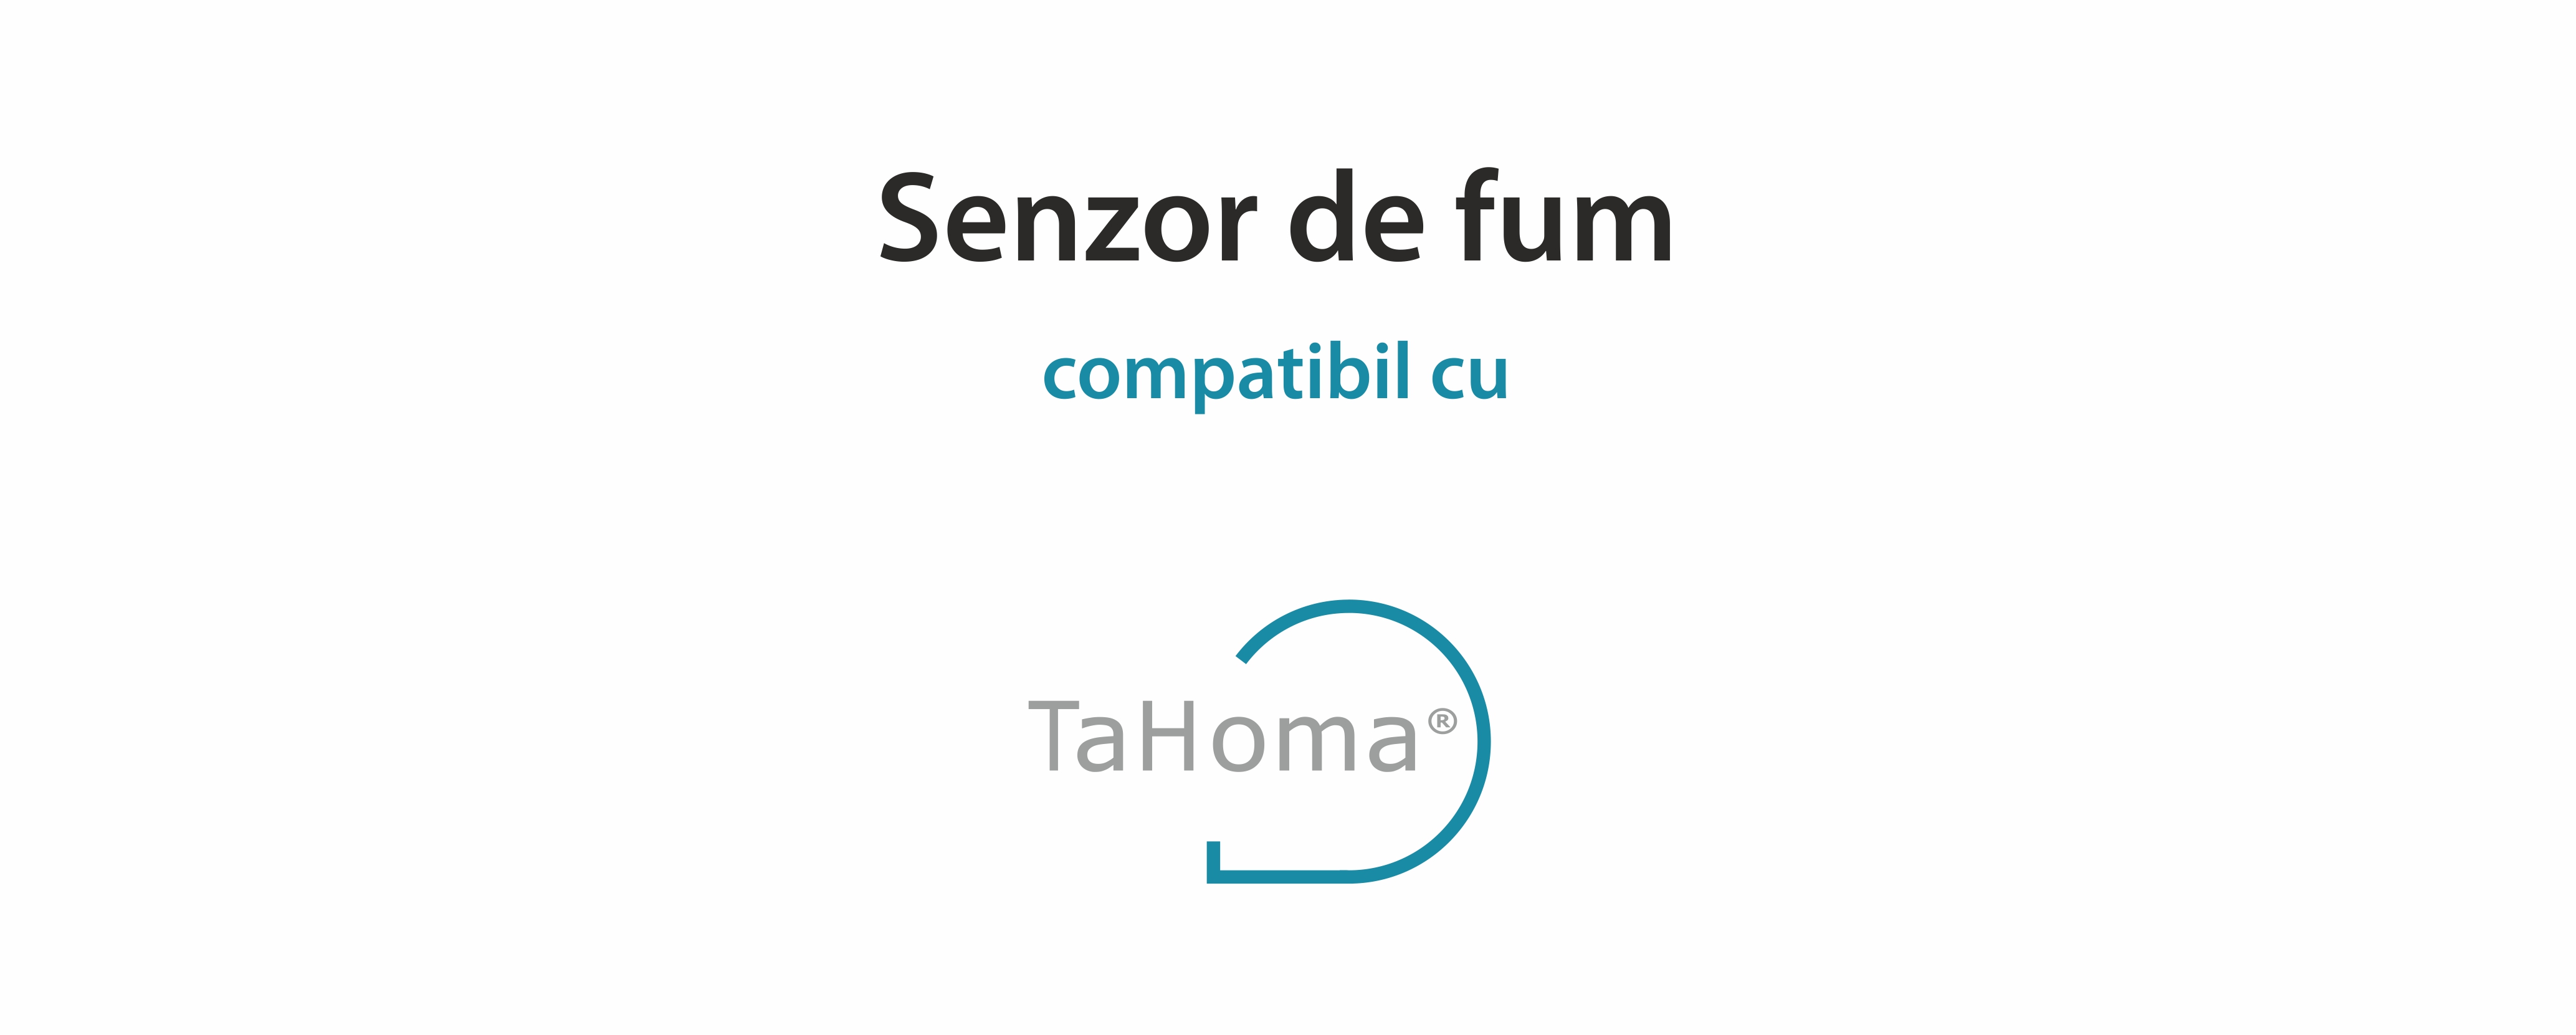 Senzor de fum TaHoma cu Alarma Integrata pentru Detectarea incendiilor, IP20, Frecventa radio 868-870 MHz